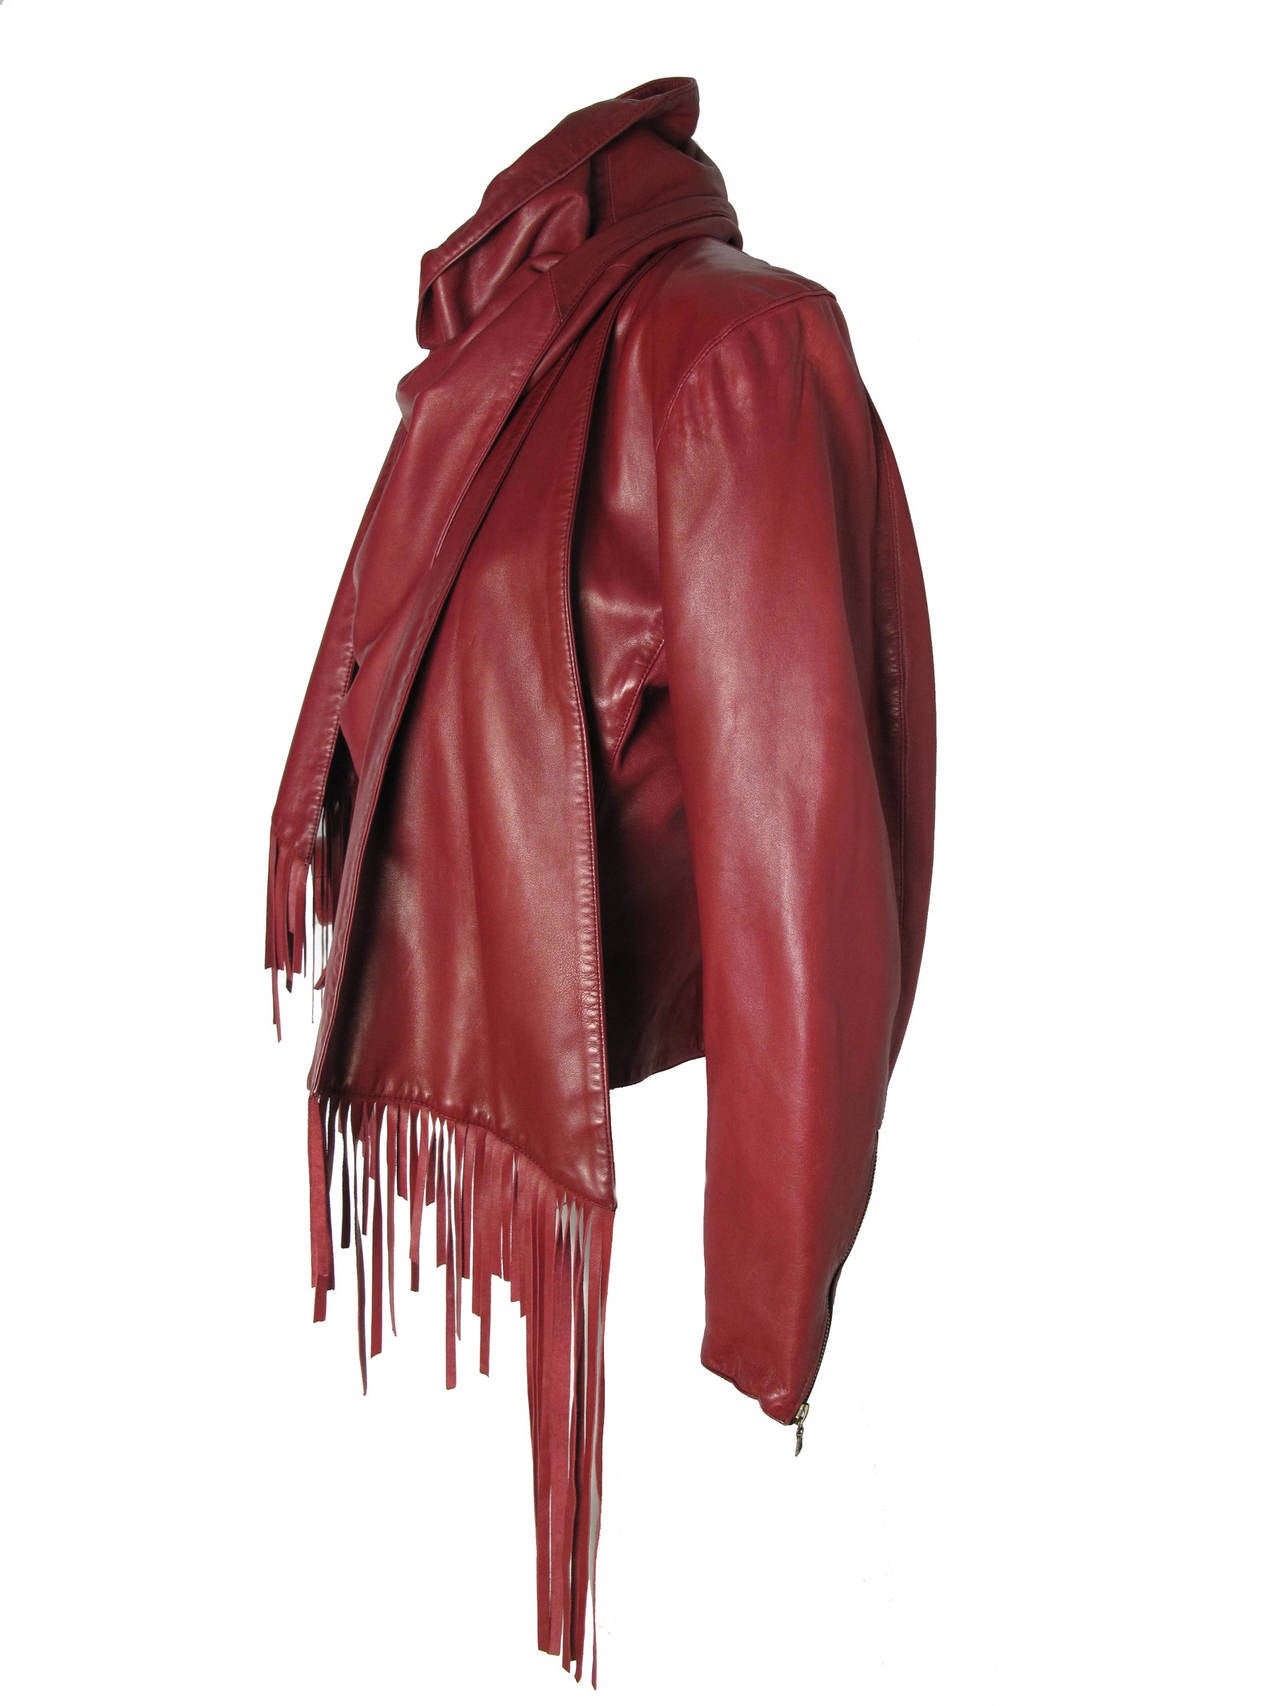 Women's 1980s Claude Montana wine colored fringe leather jacket